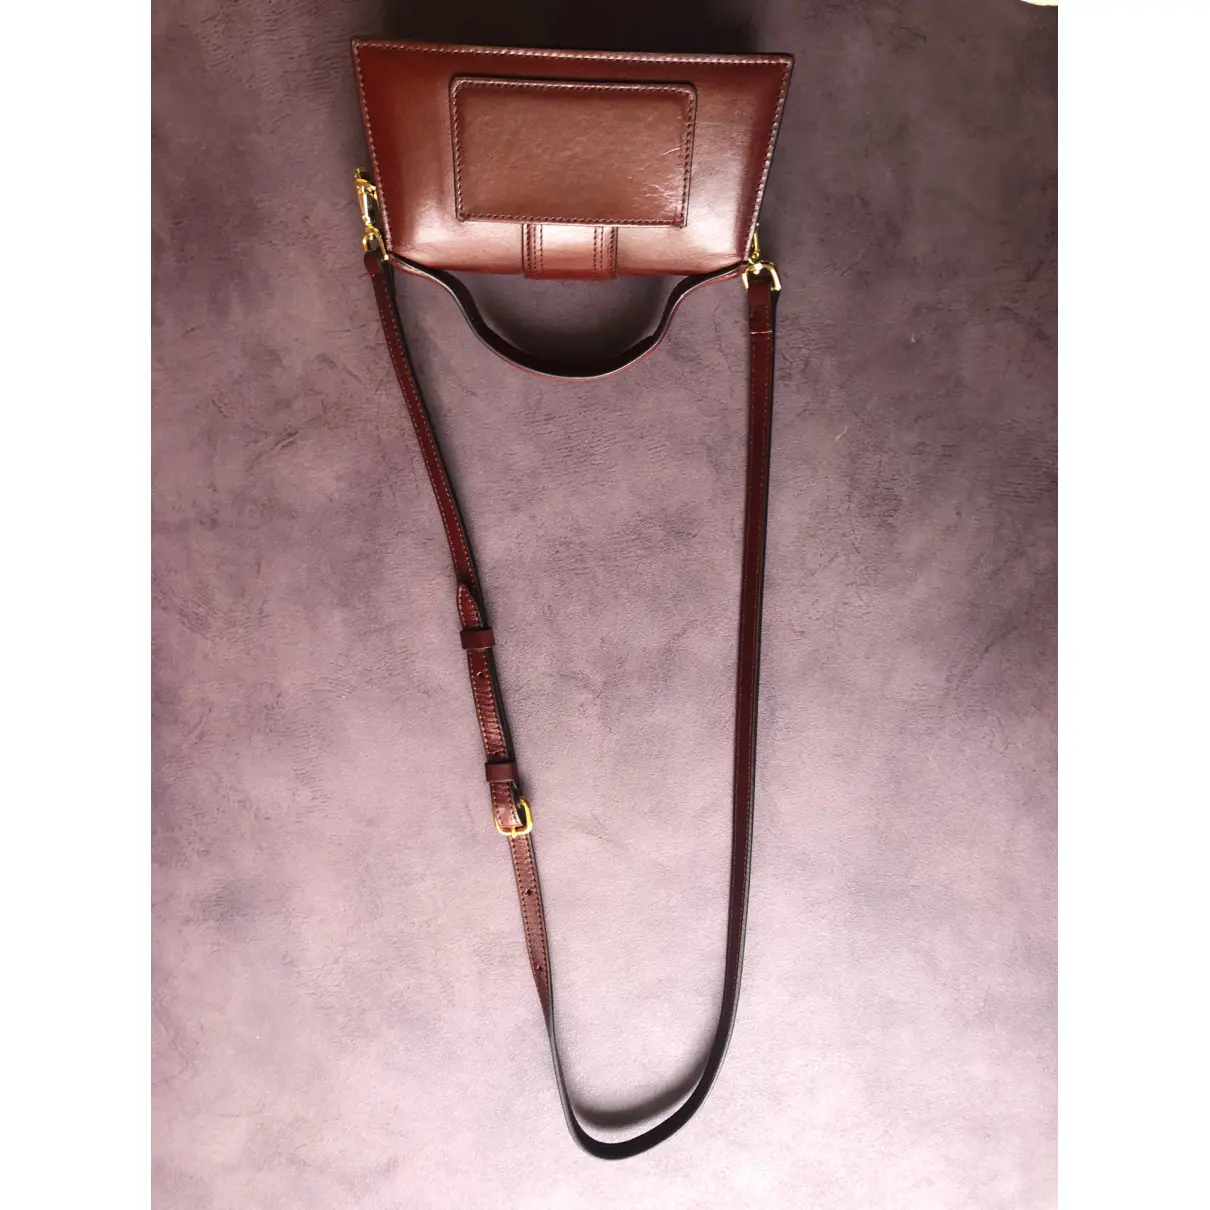 Buy Jacquemus Le Bambino leather handbag online